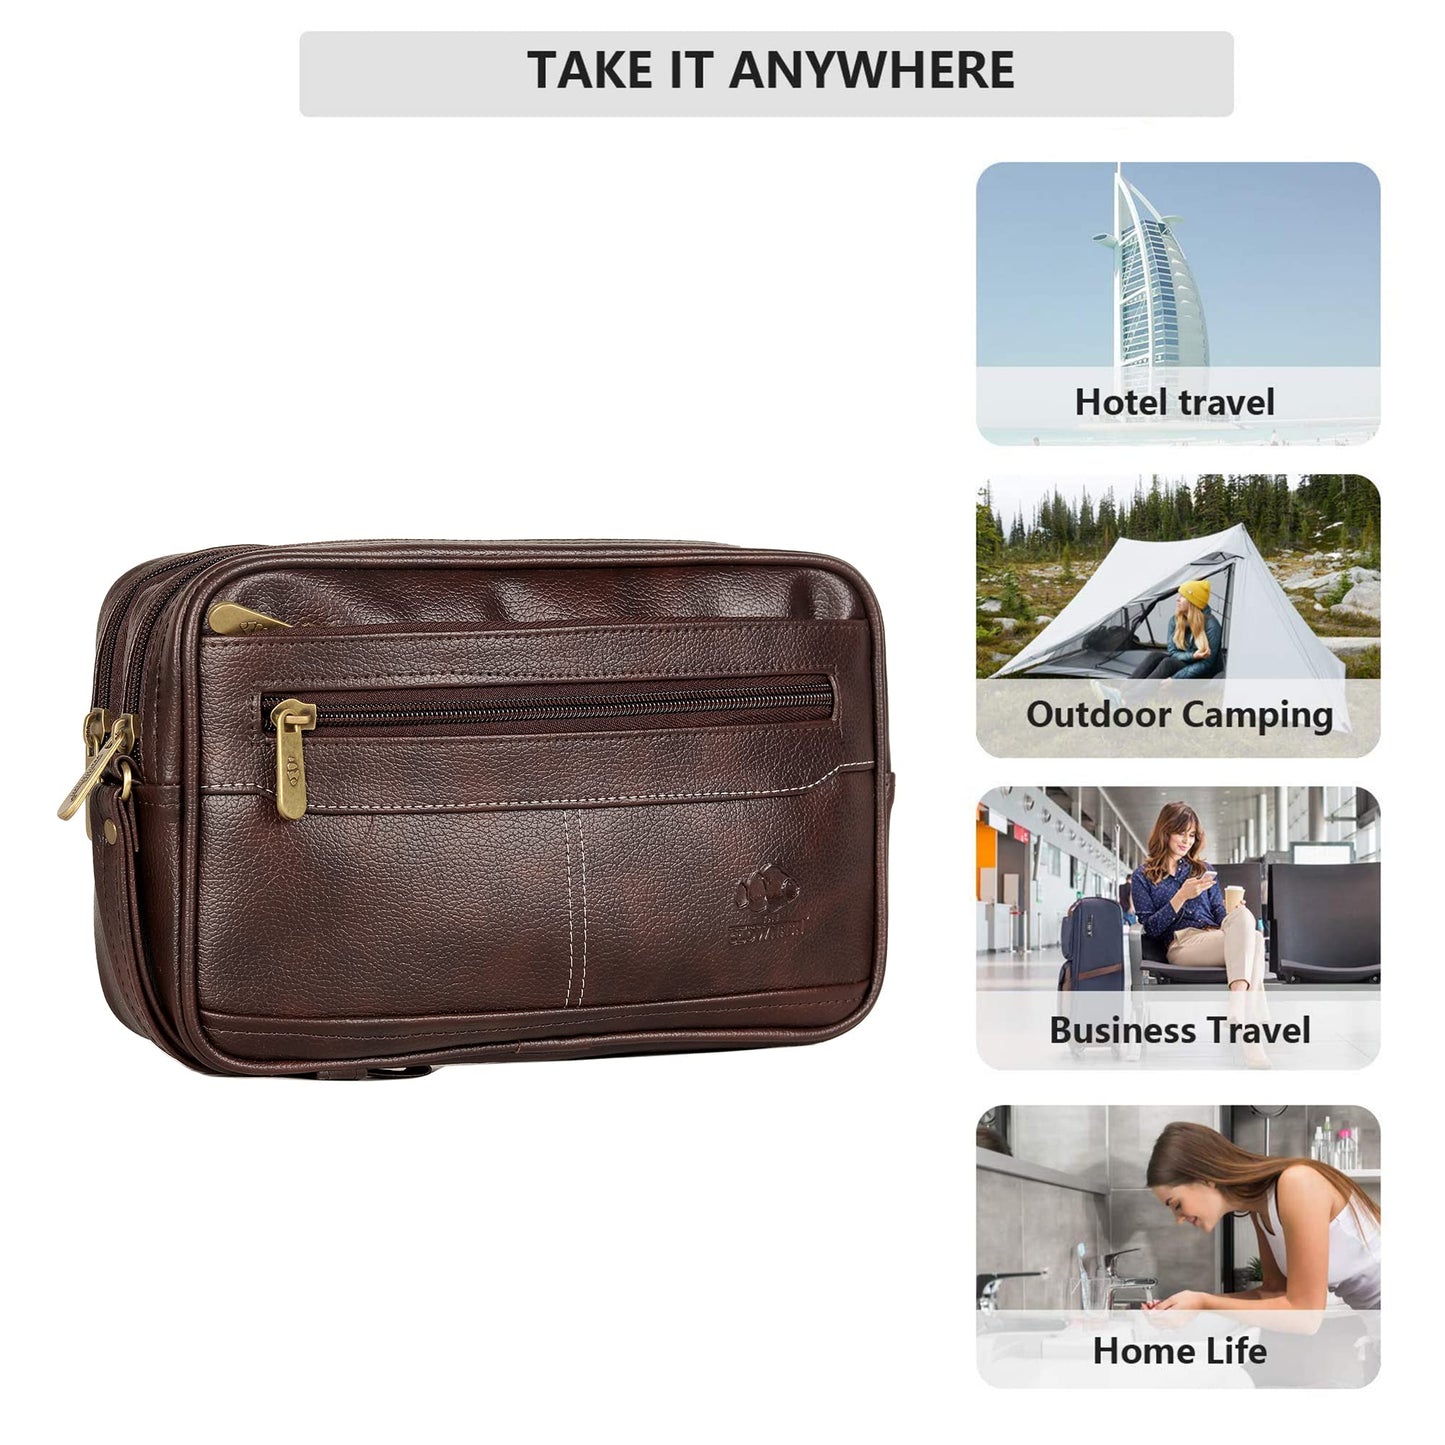 THE CLOWNFISH Unisex Multipurpose Travel Pouch Money Cash Pouch Wrist Handbag Clutch With Wrist Handle (Dark Brown)